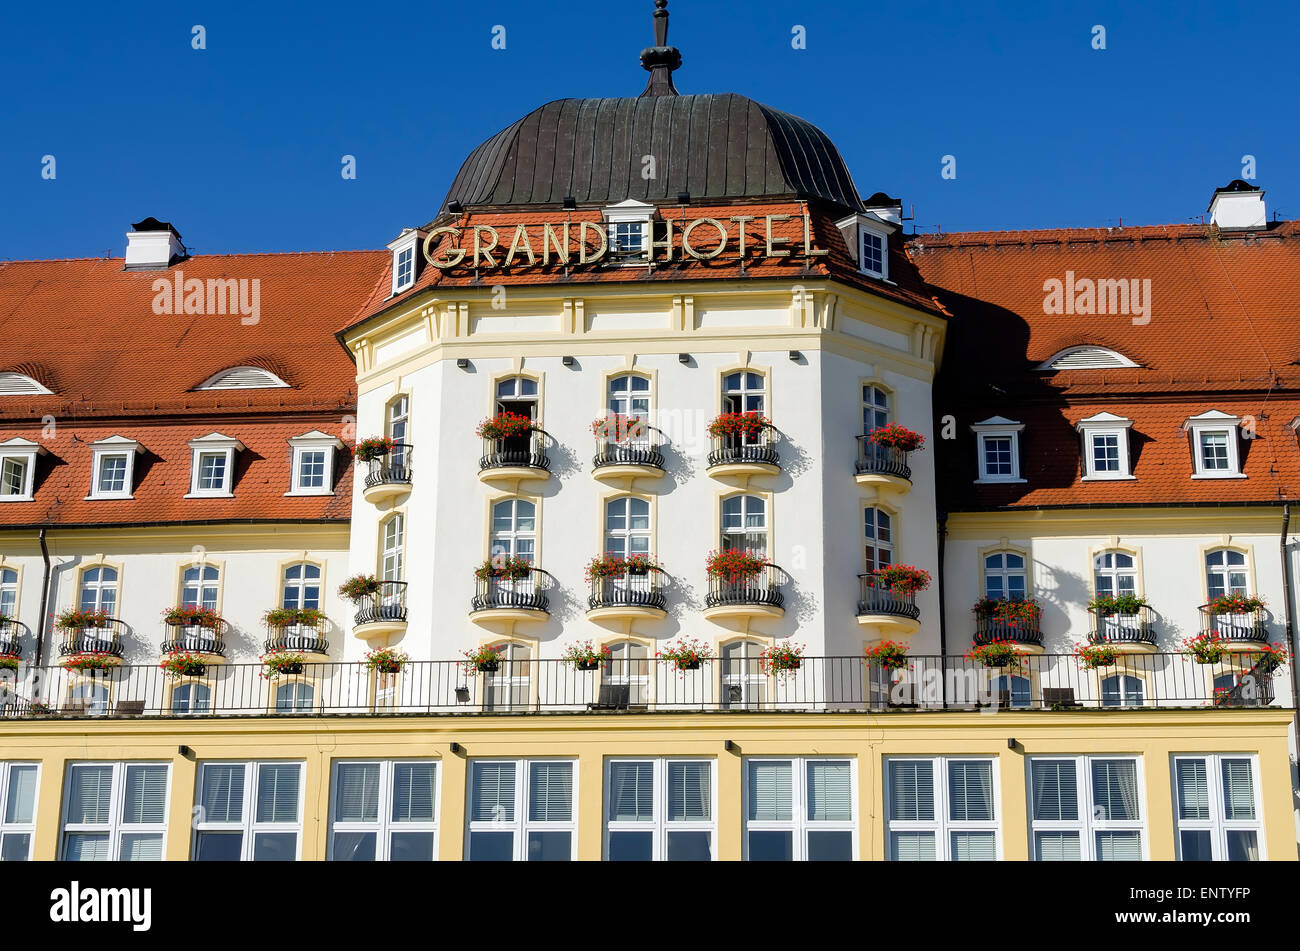 Sofitel Grand Hotel  famous Baltic Sea resort Sopot Poland Northern Europe Stock Photo